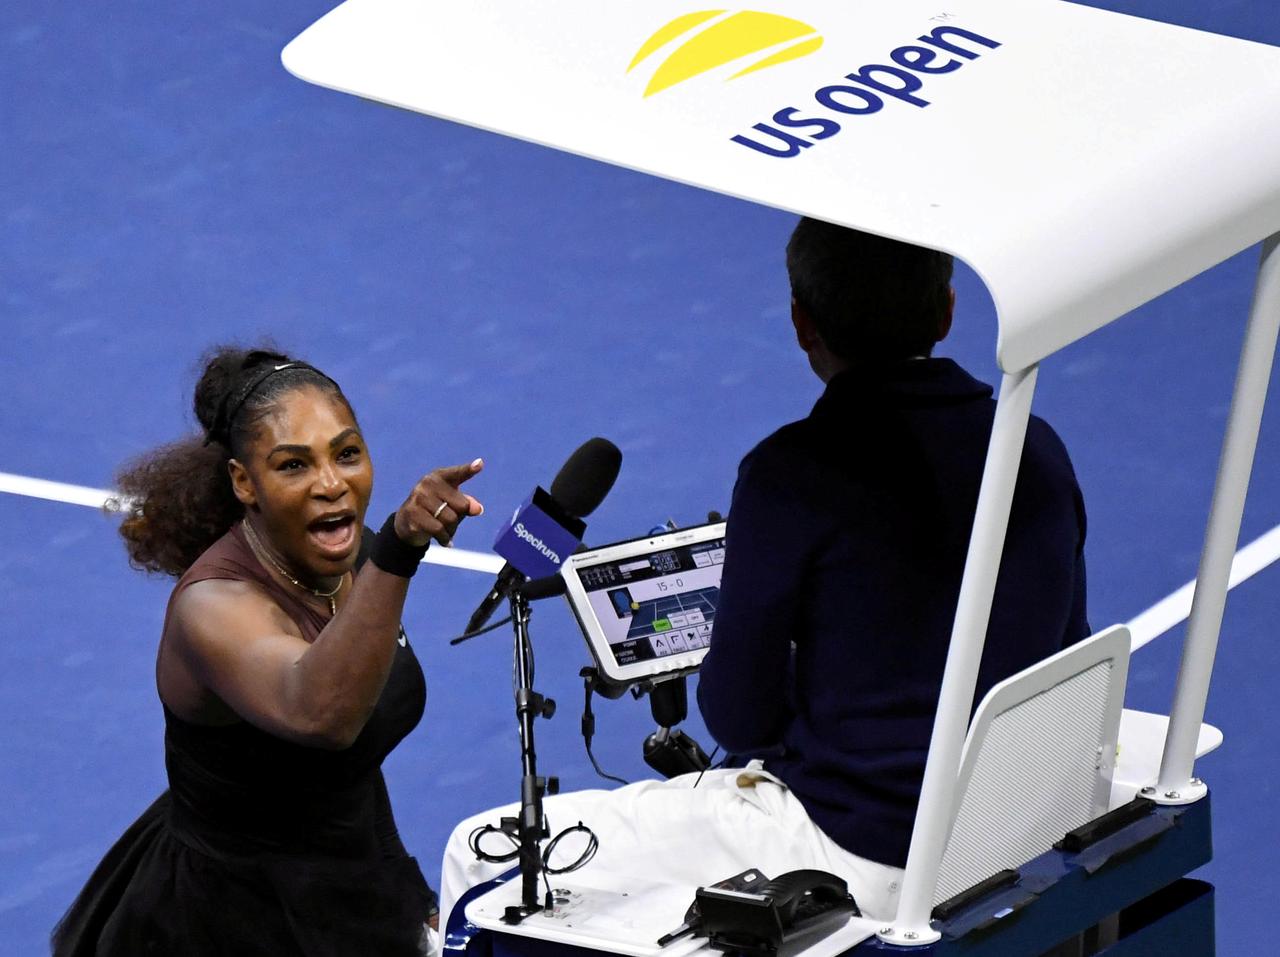 Tennis star Serena Williams